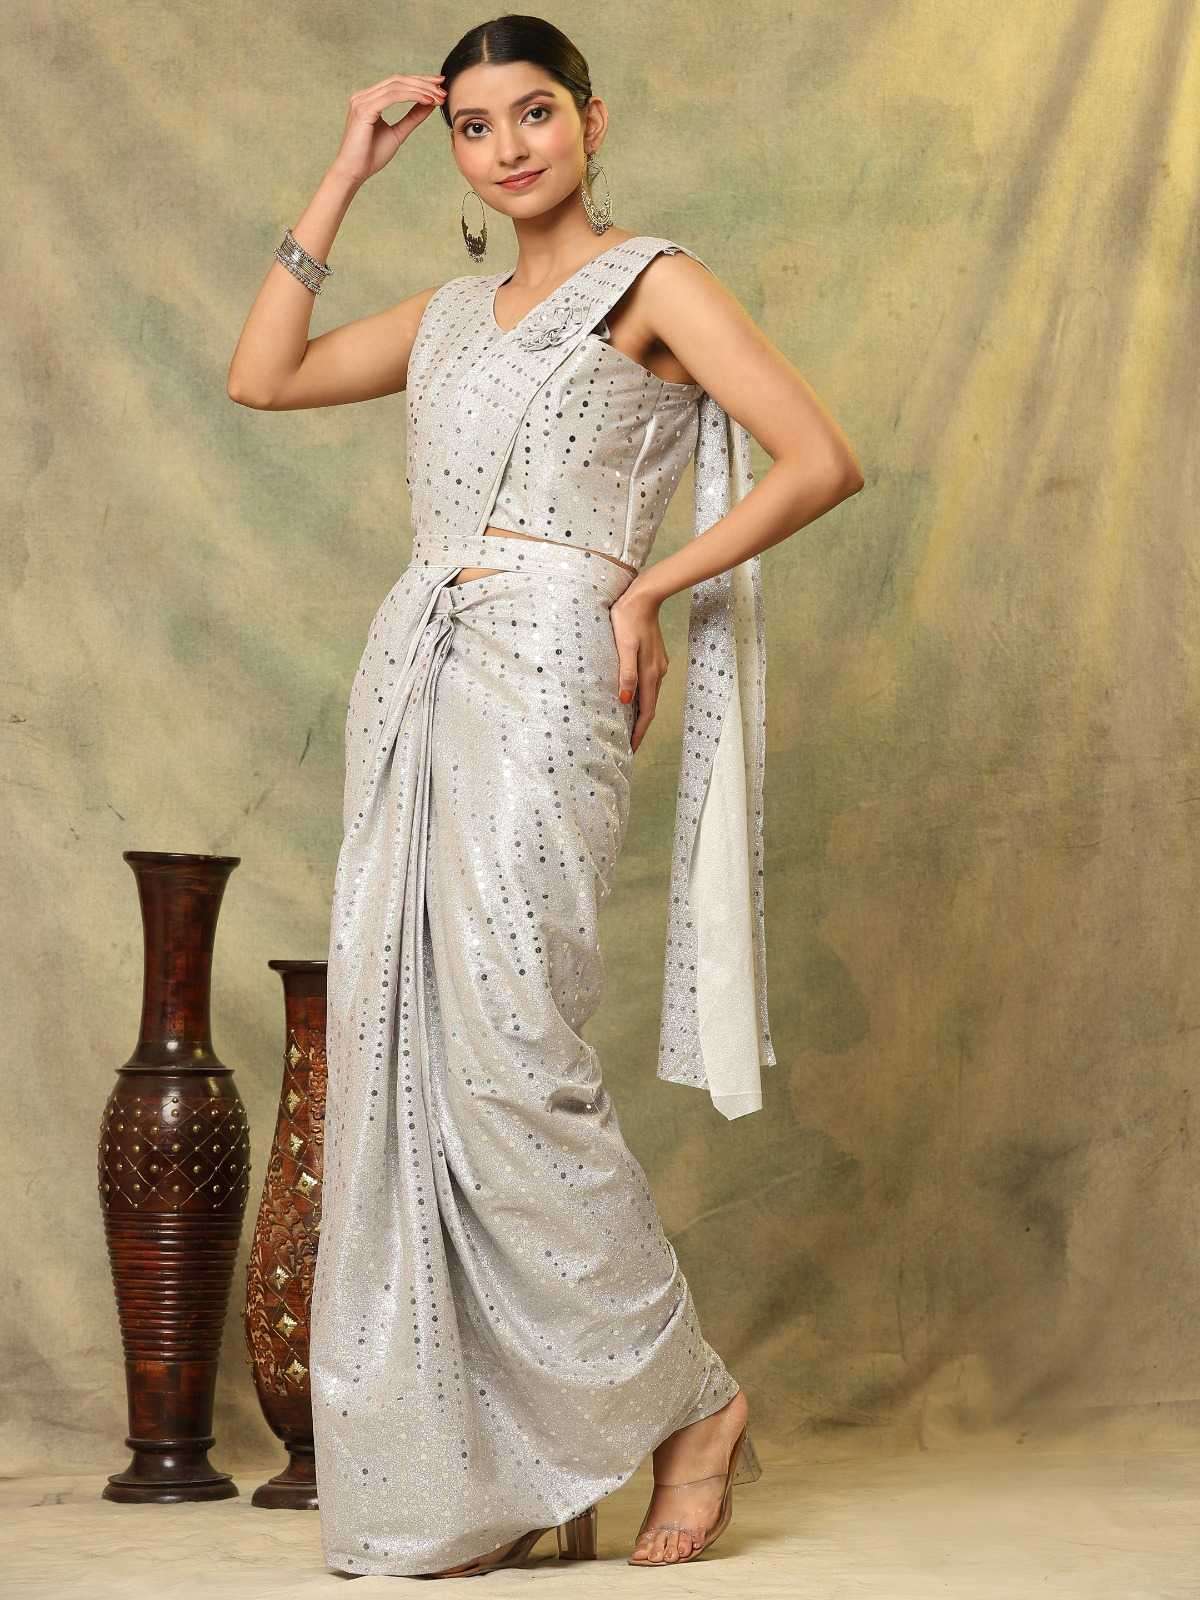 Imported spandex Stretchable fabric body shaper petticoat shapeweare at Rs  160/piece, Saree Shapewear Petticoat in New Delhi